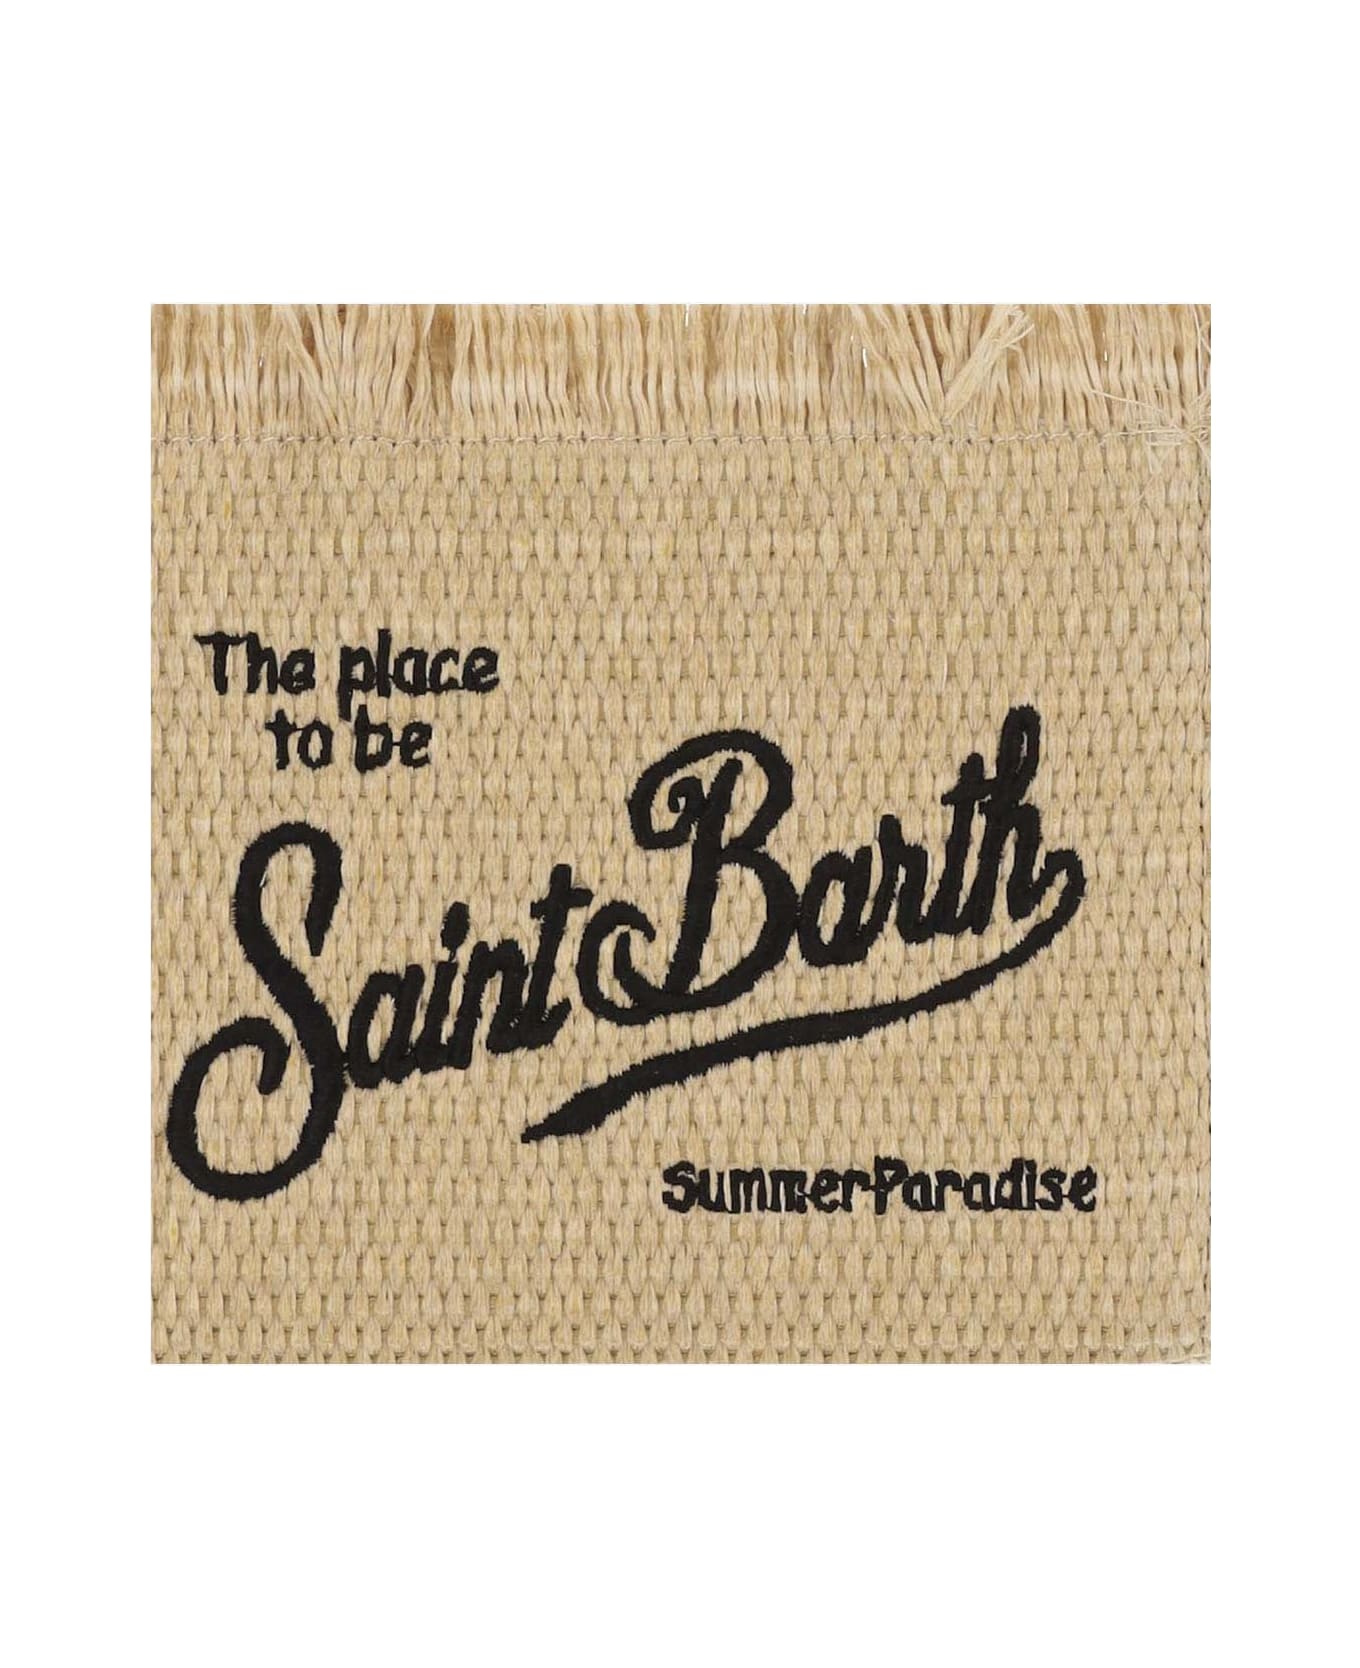 MC2 Saint Barth Straw Tote Bag With Logo - Beige